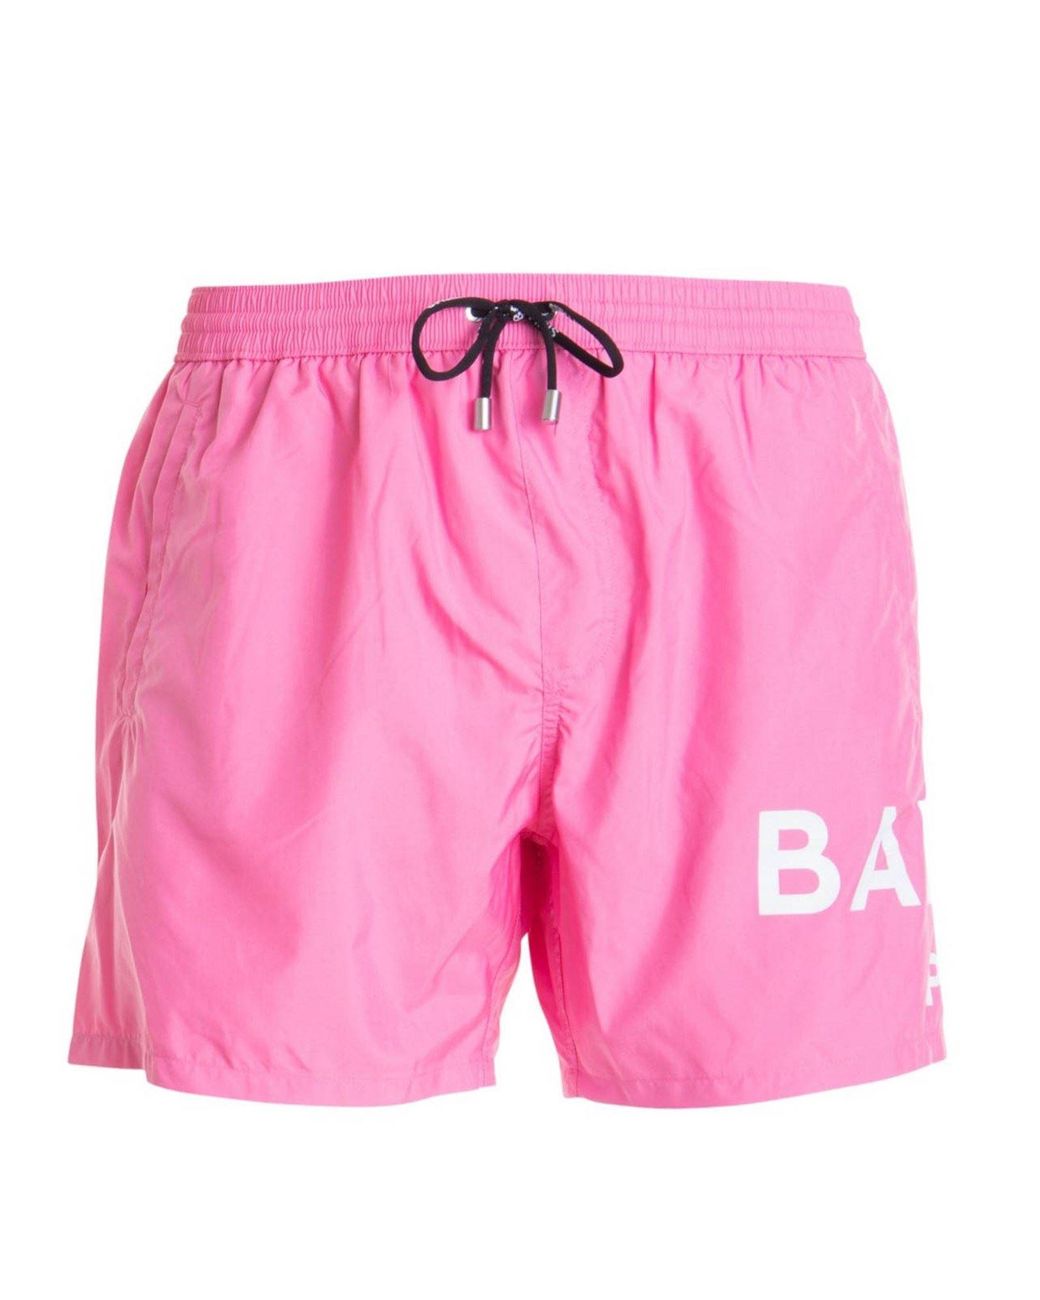 Balmain Synthetic Logo Stripe Swim Shorts in Pink for Men - Lyst